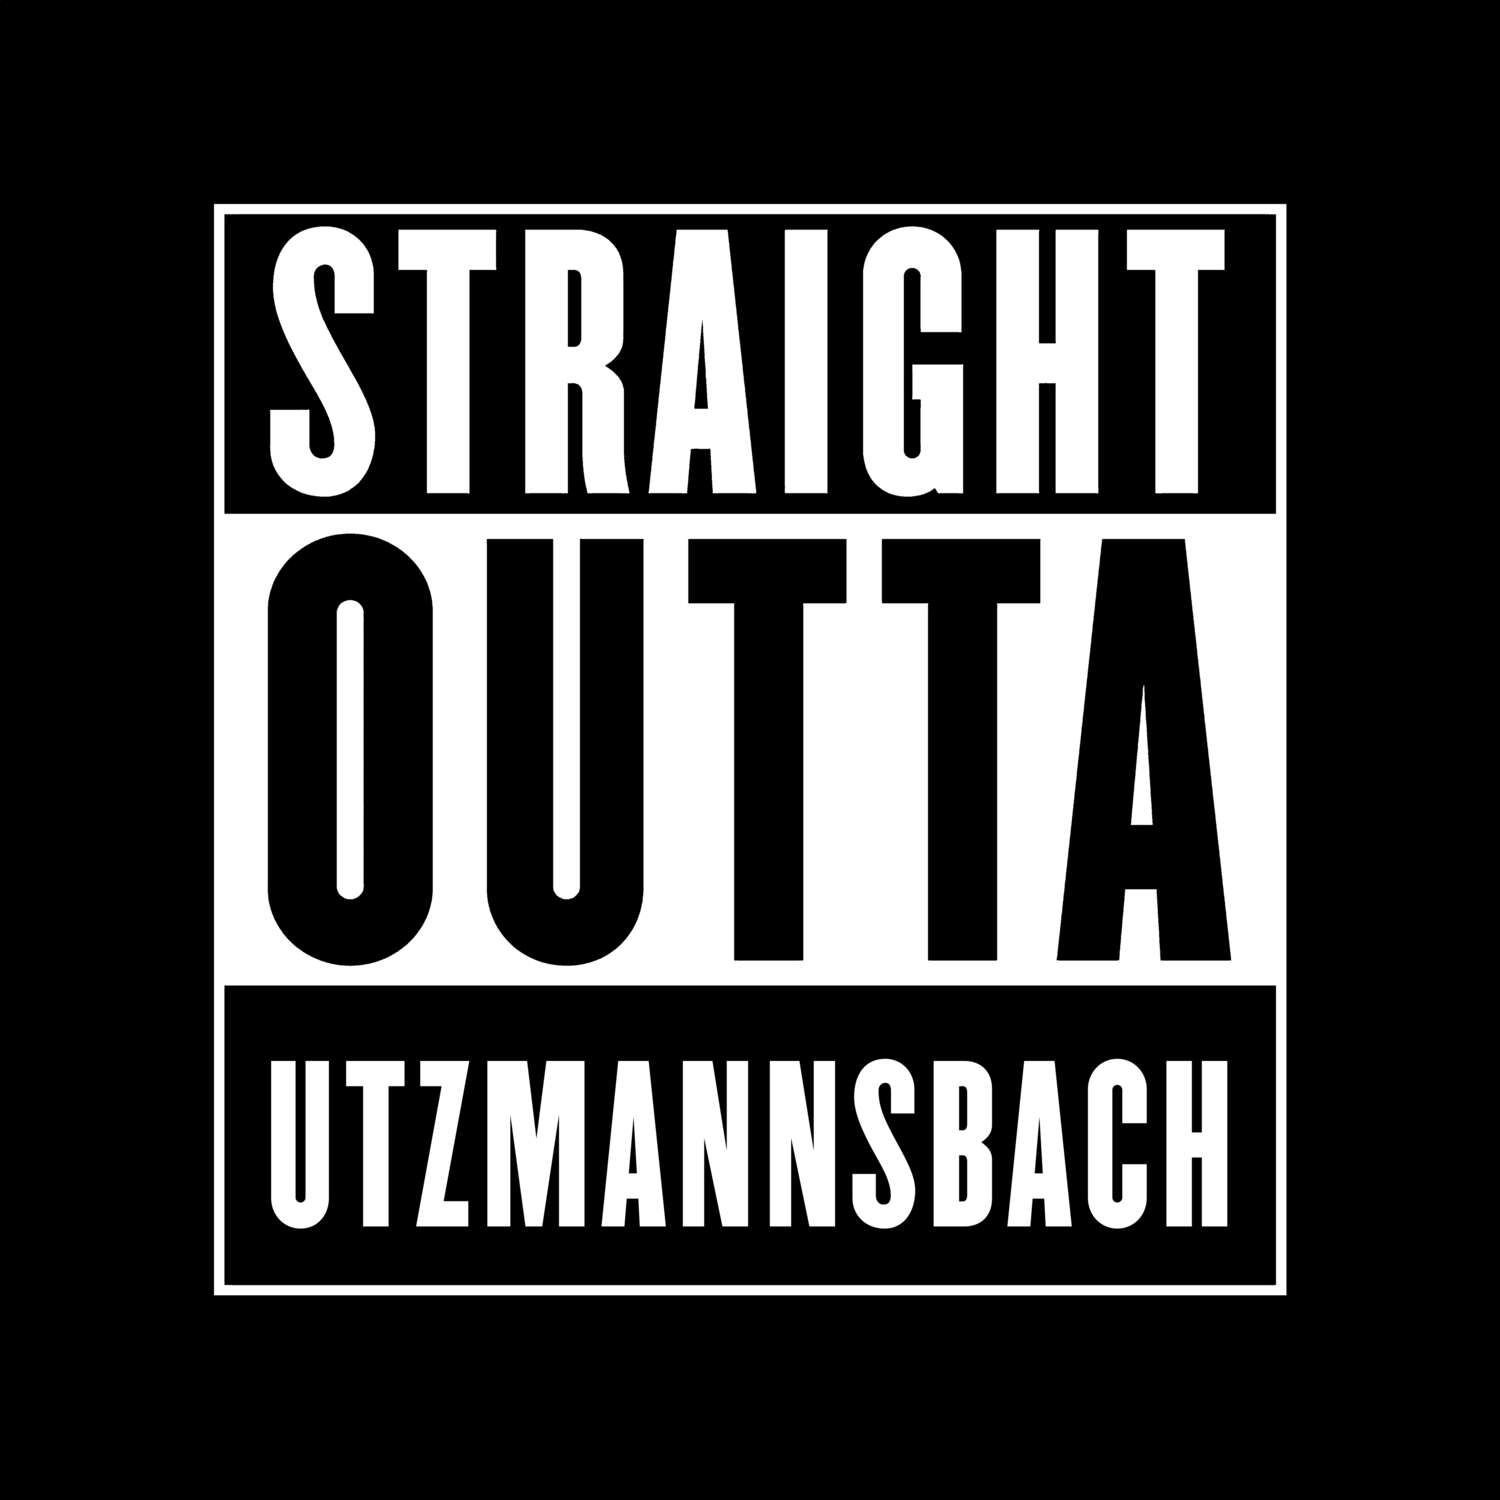 Utzmannsbach T-Shirt »Straight Outta«